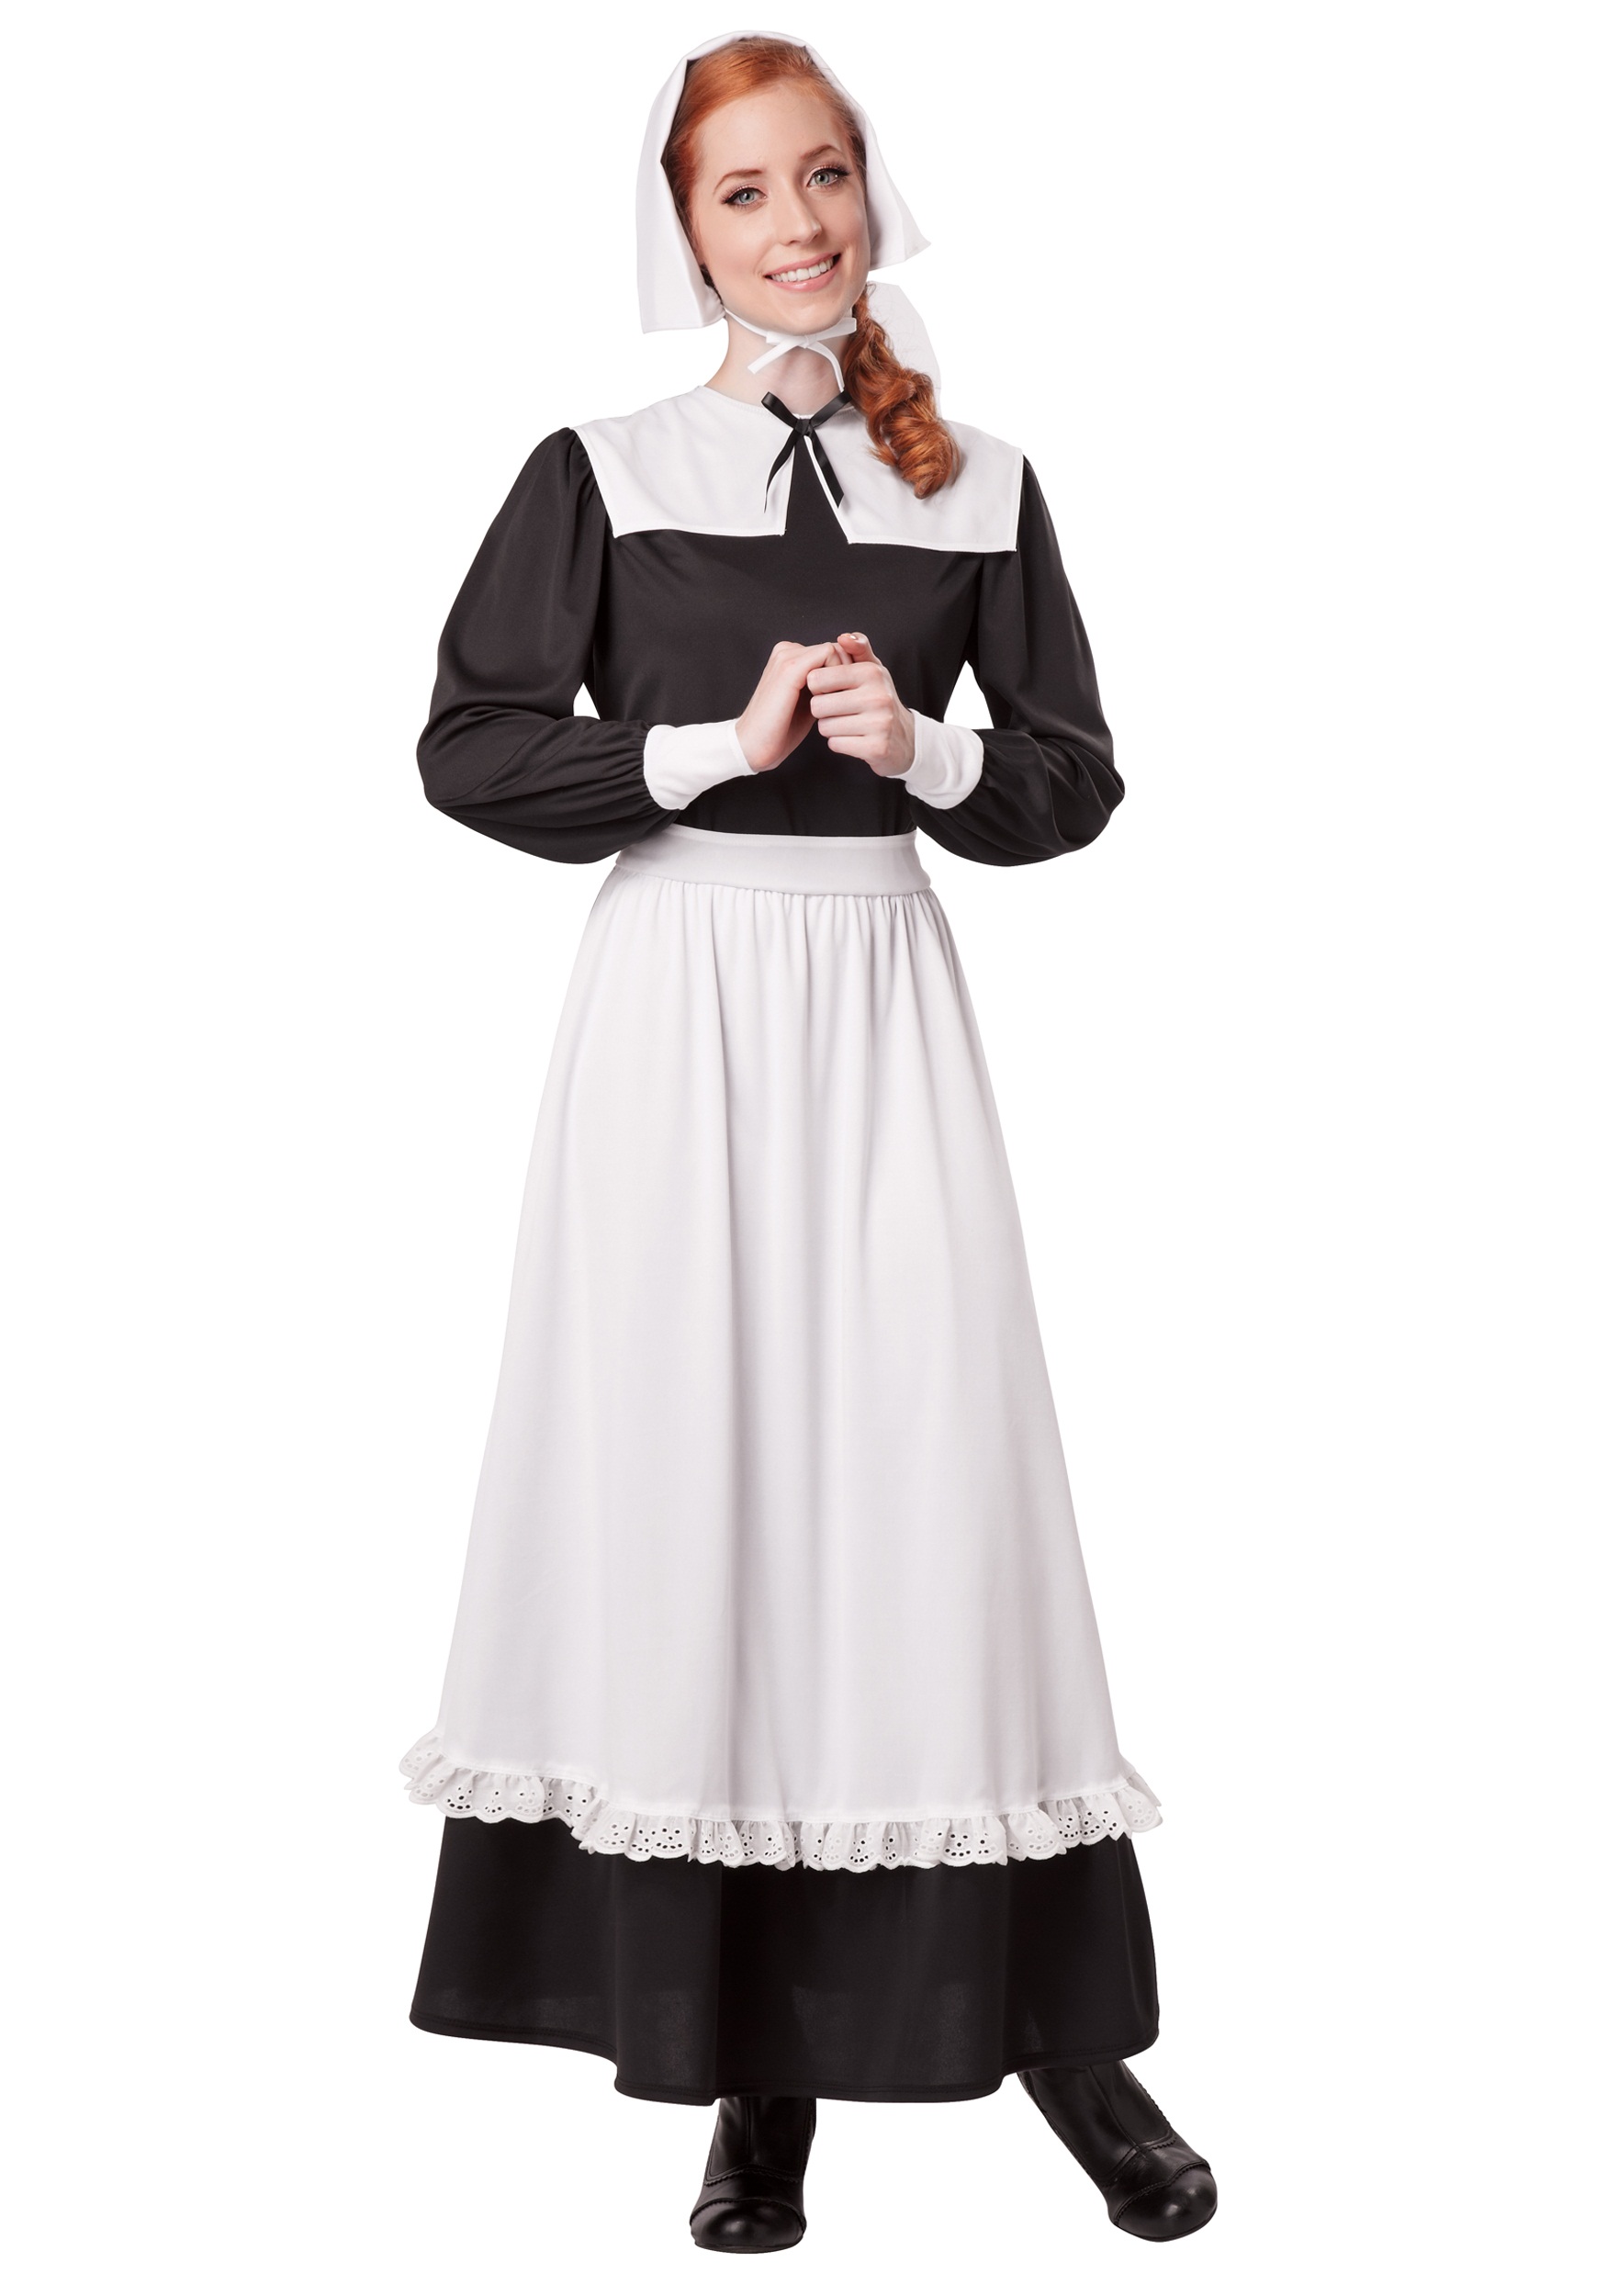 pilgrim-woman-costume.jpg